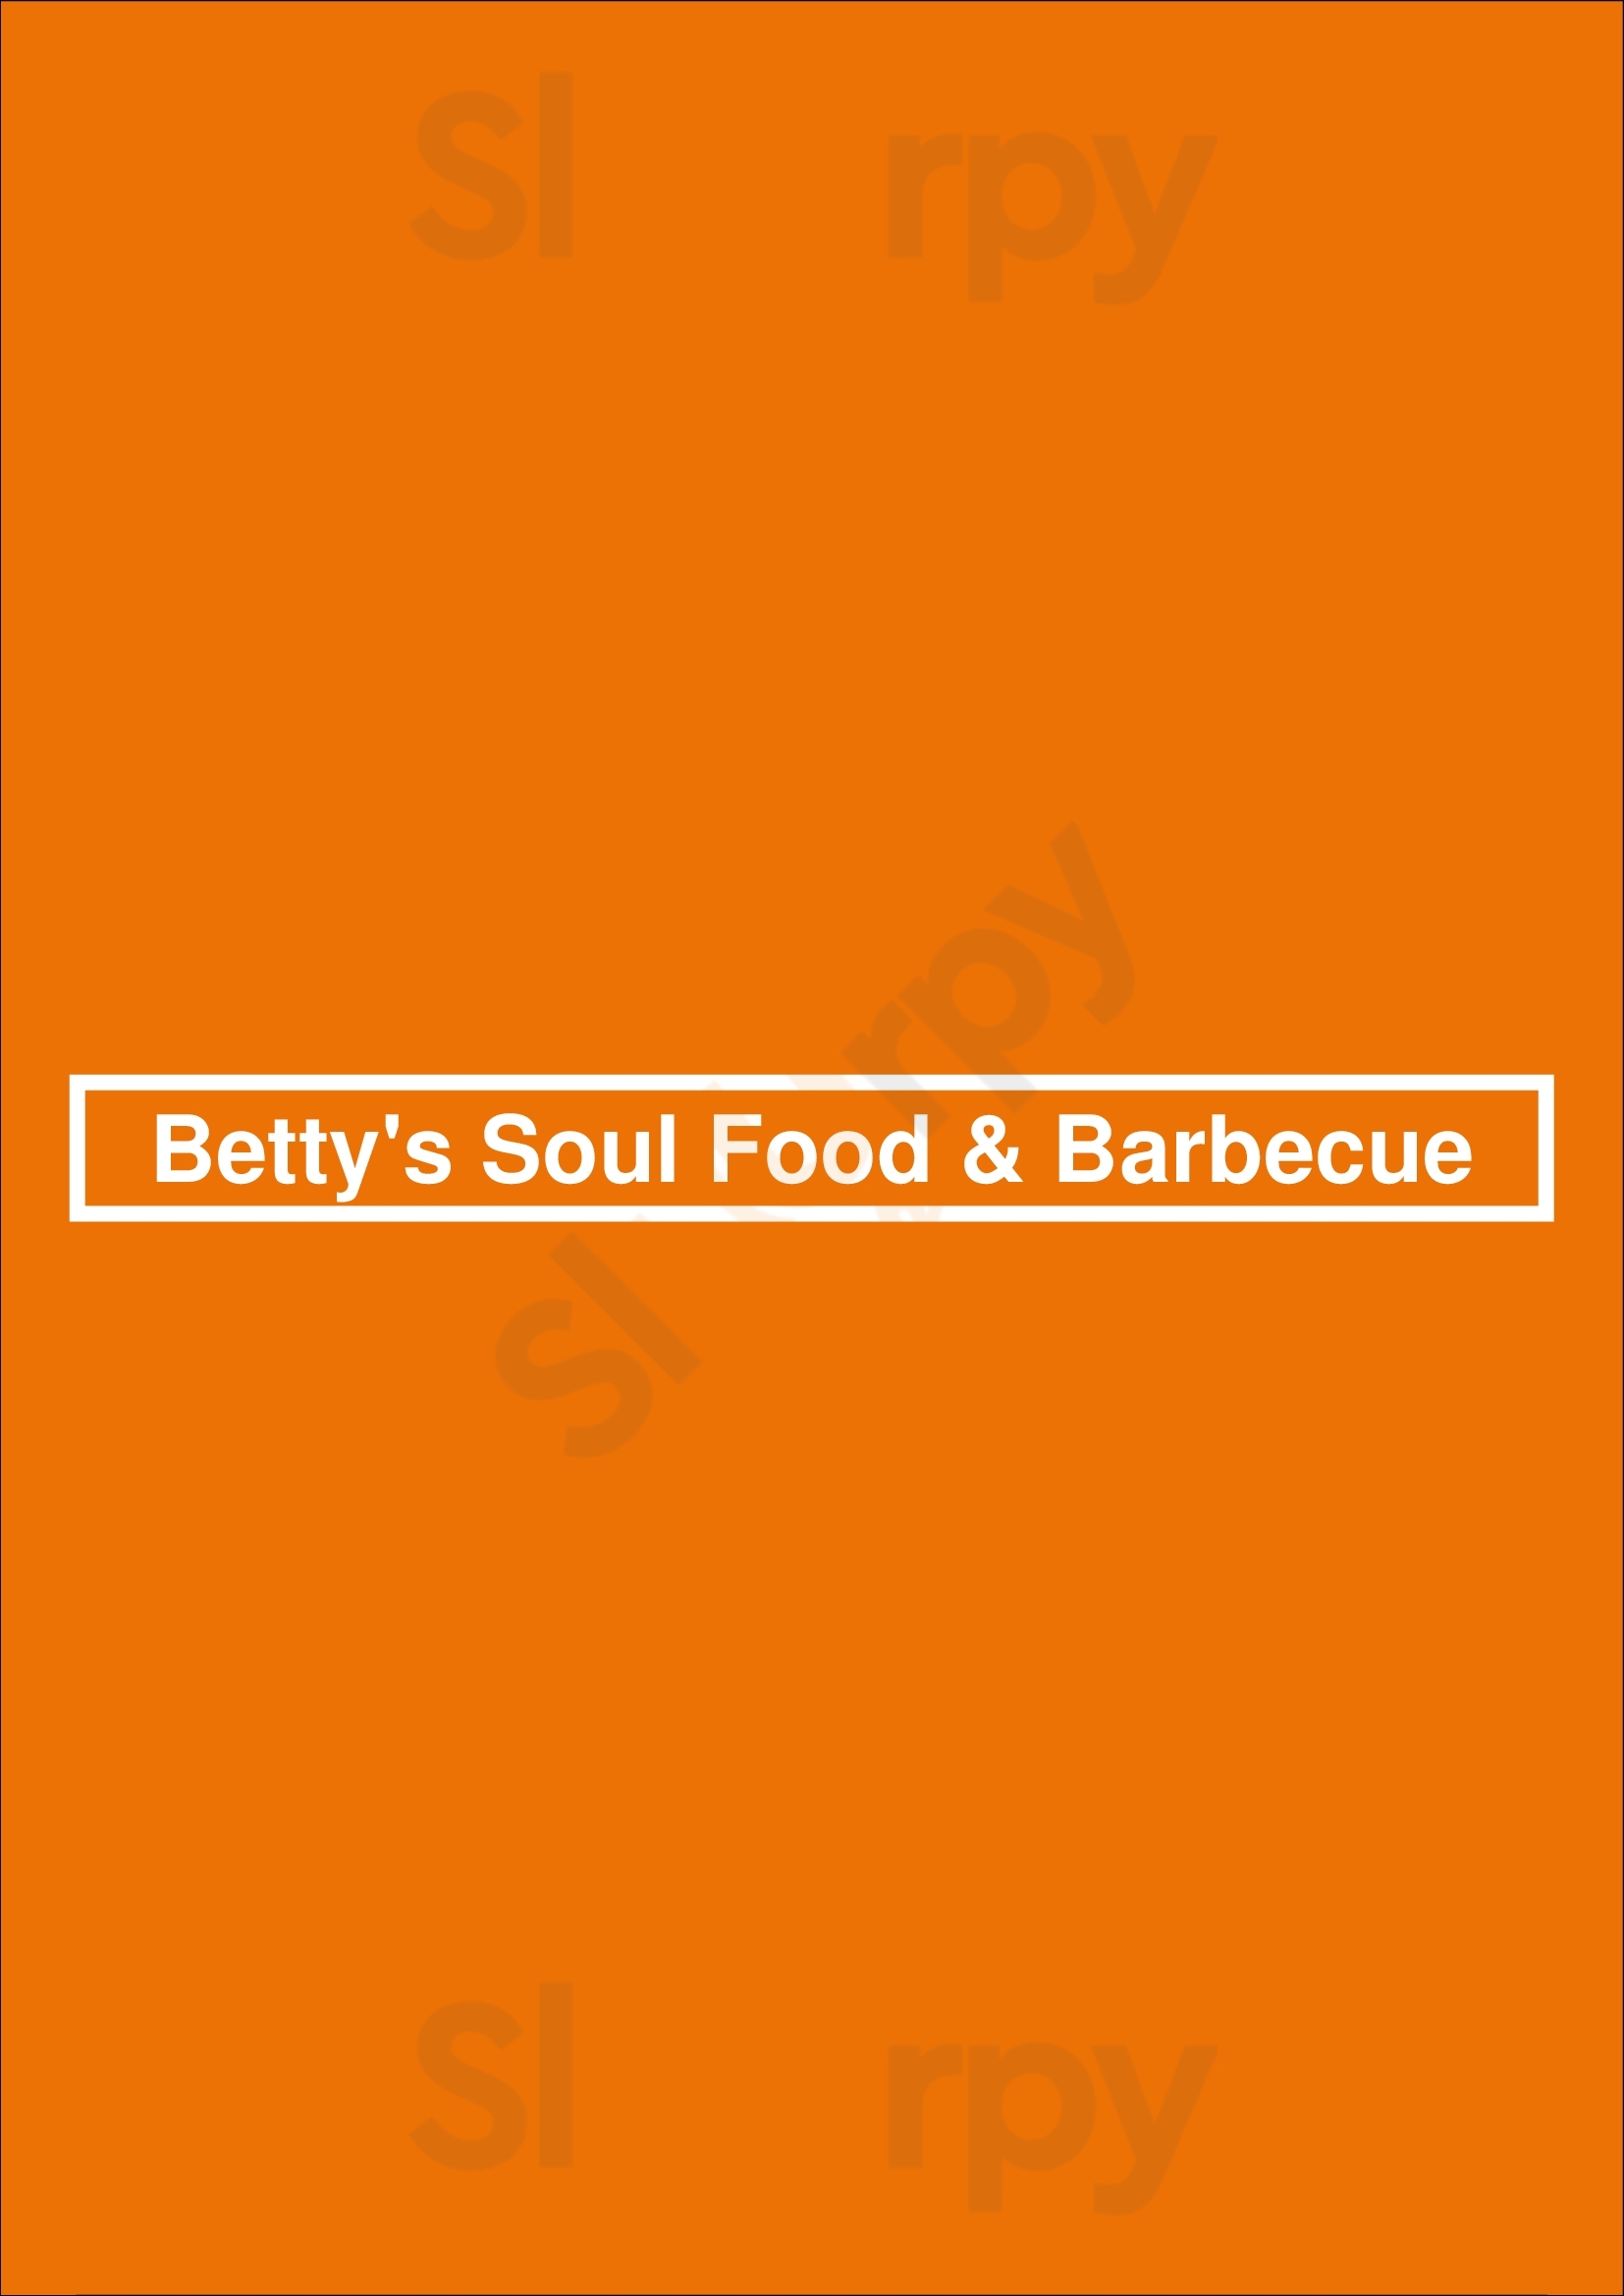 Betty's Soul Food & Barbecue Fort Lauderdale Menu - 1